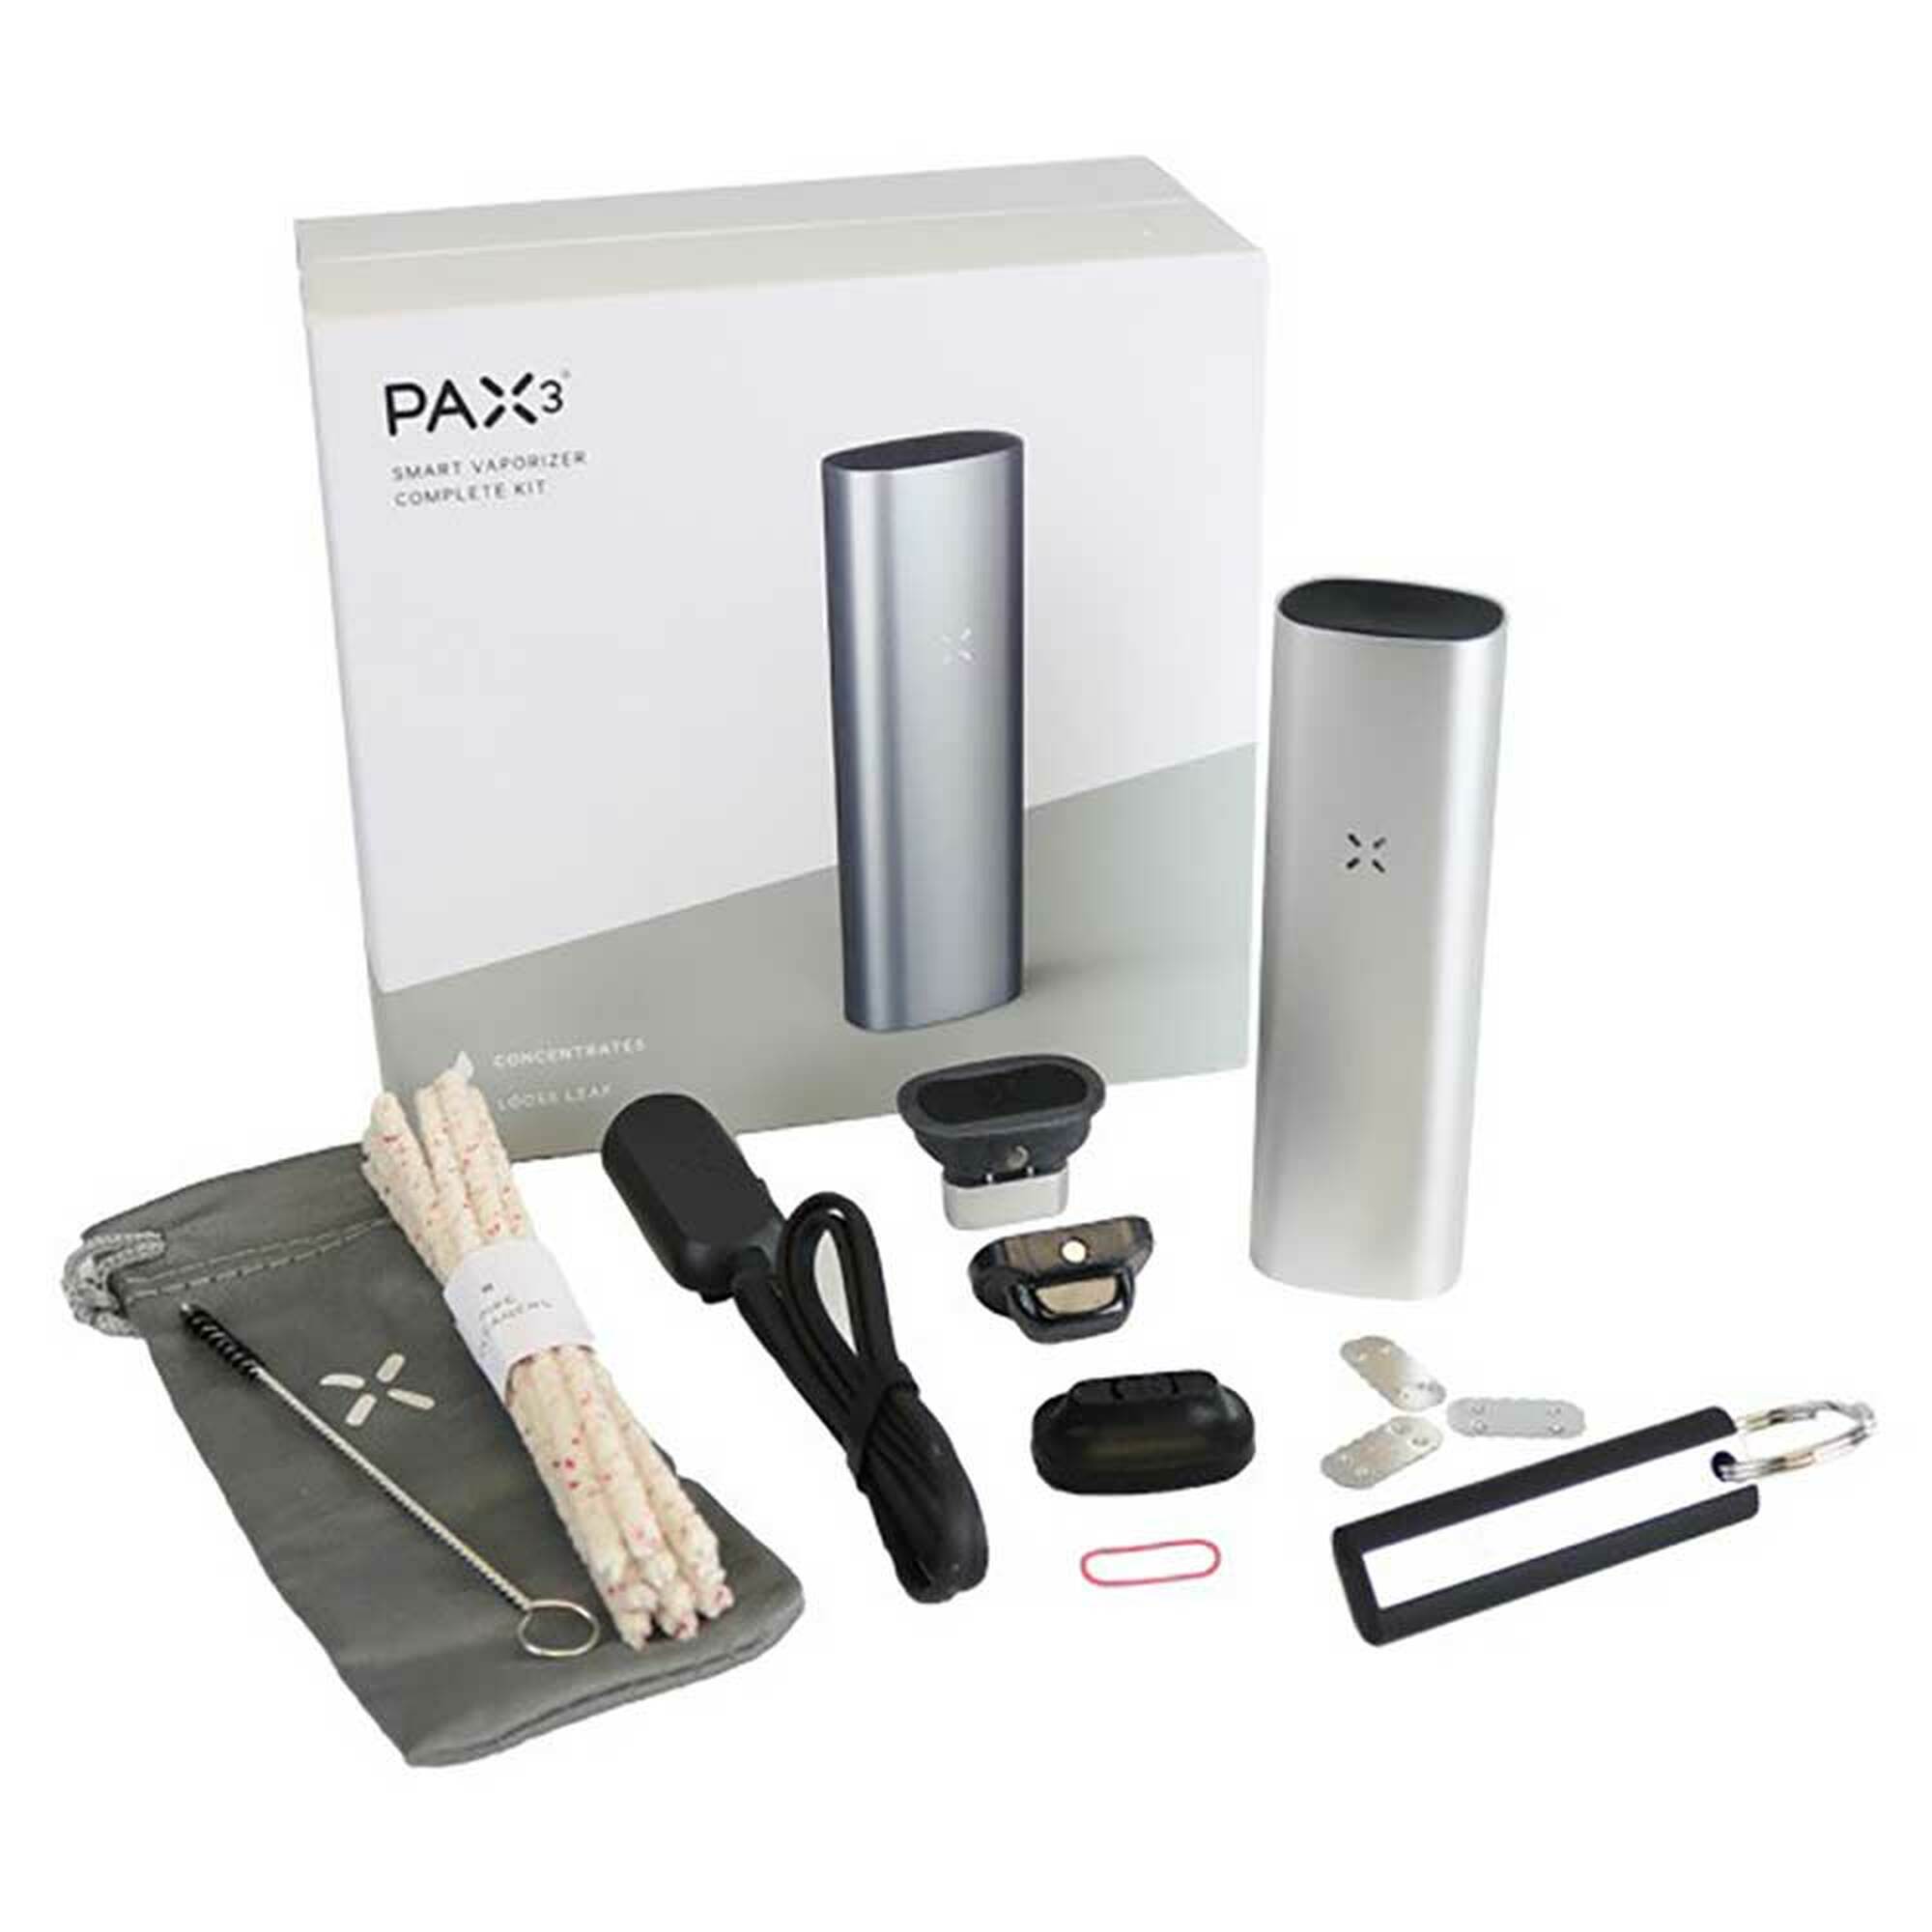 Pax 3 Vaporizer, Complete Kit